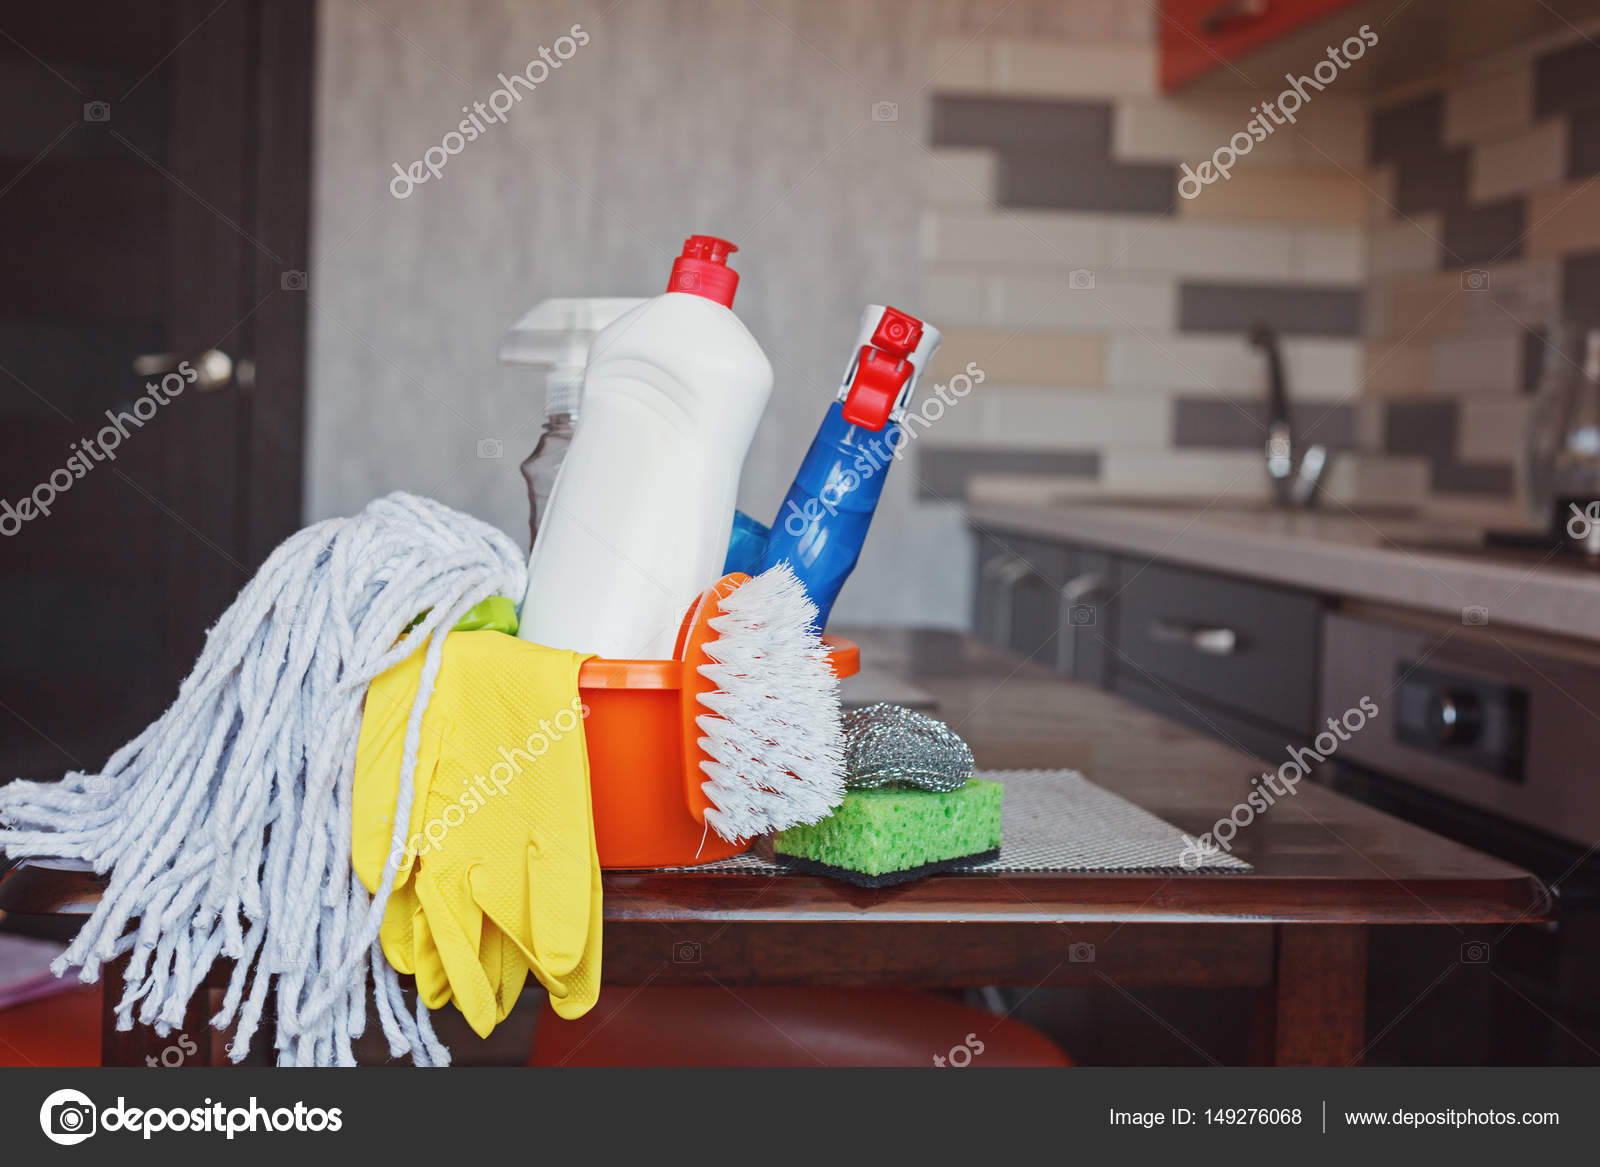 Kitchen & Bath Cleaning Supplies - Cleaning Supplies - Hardware